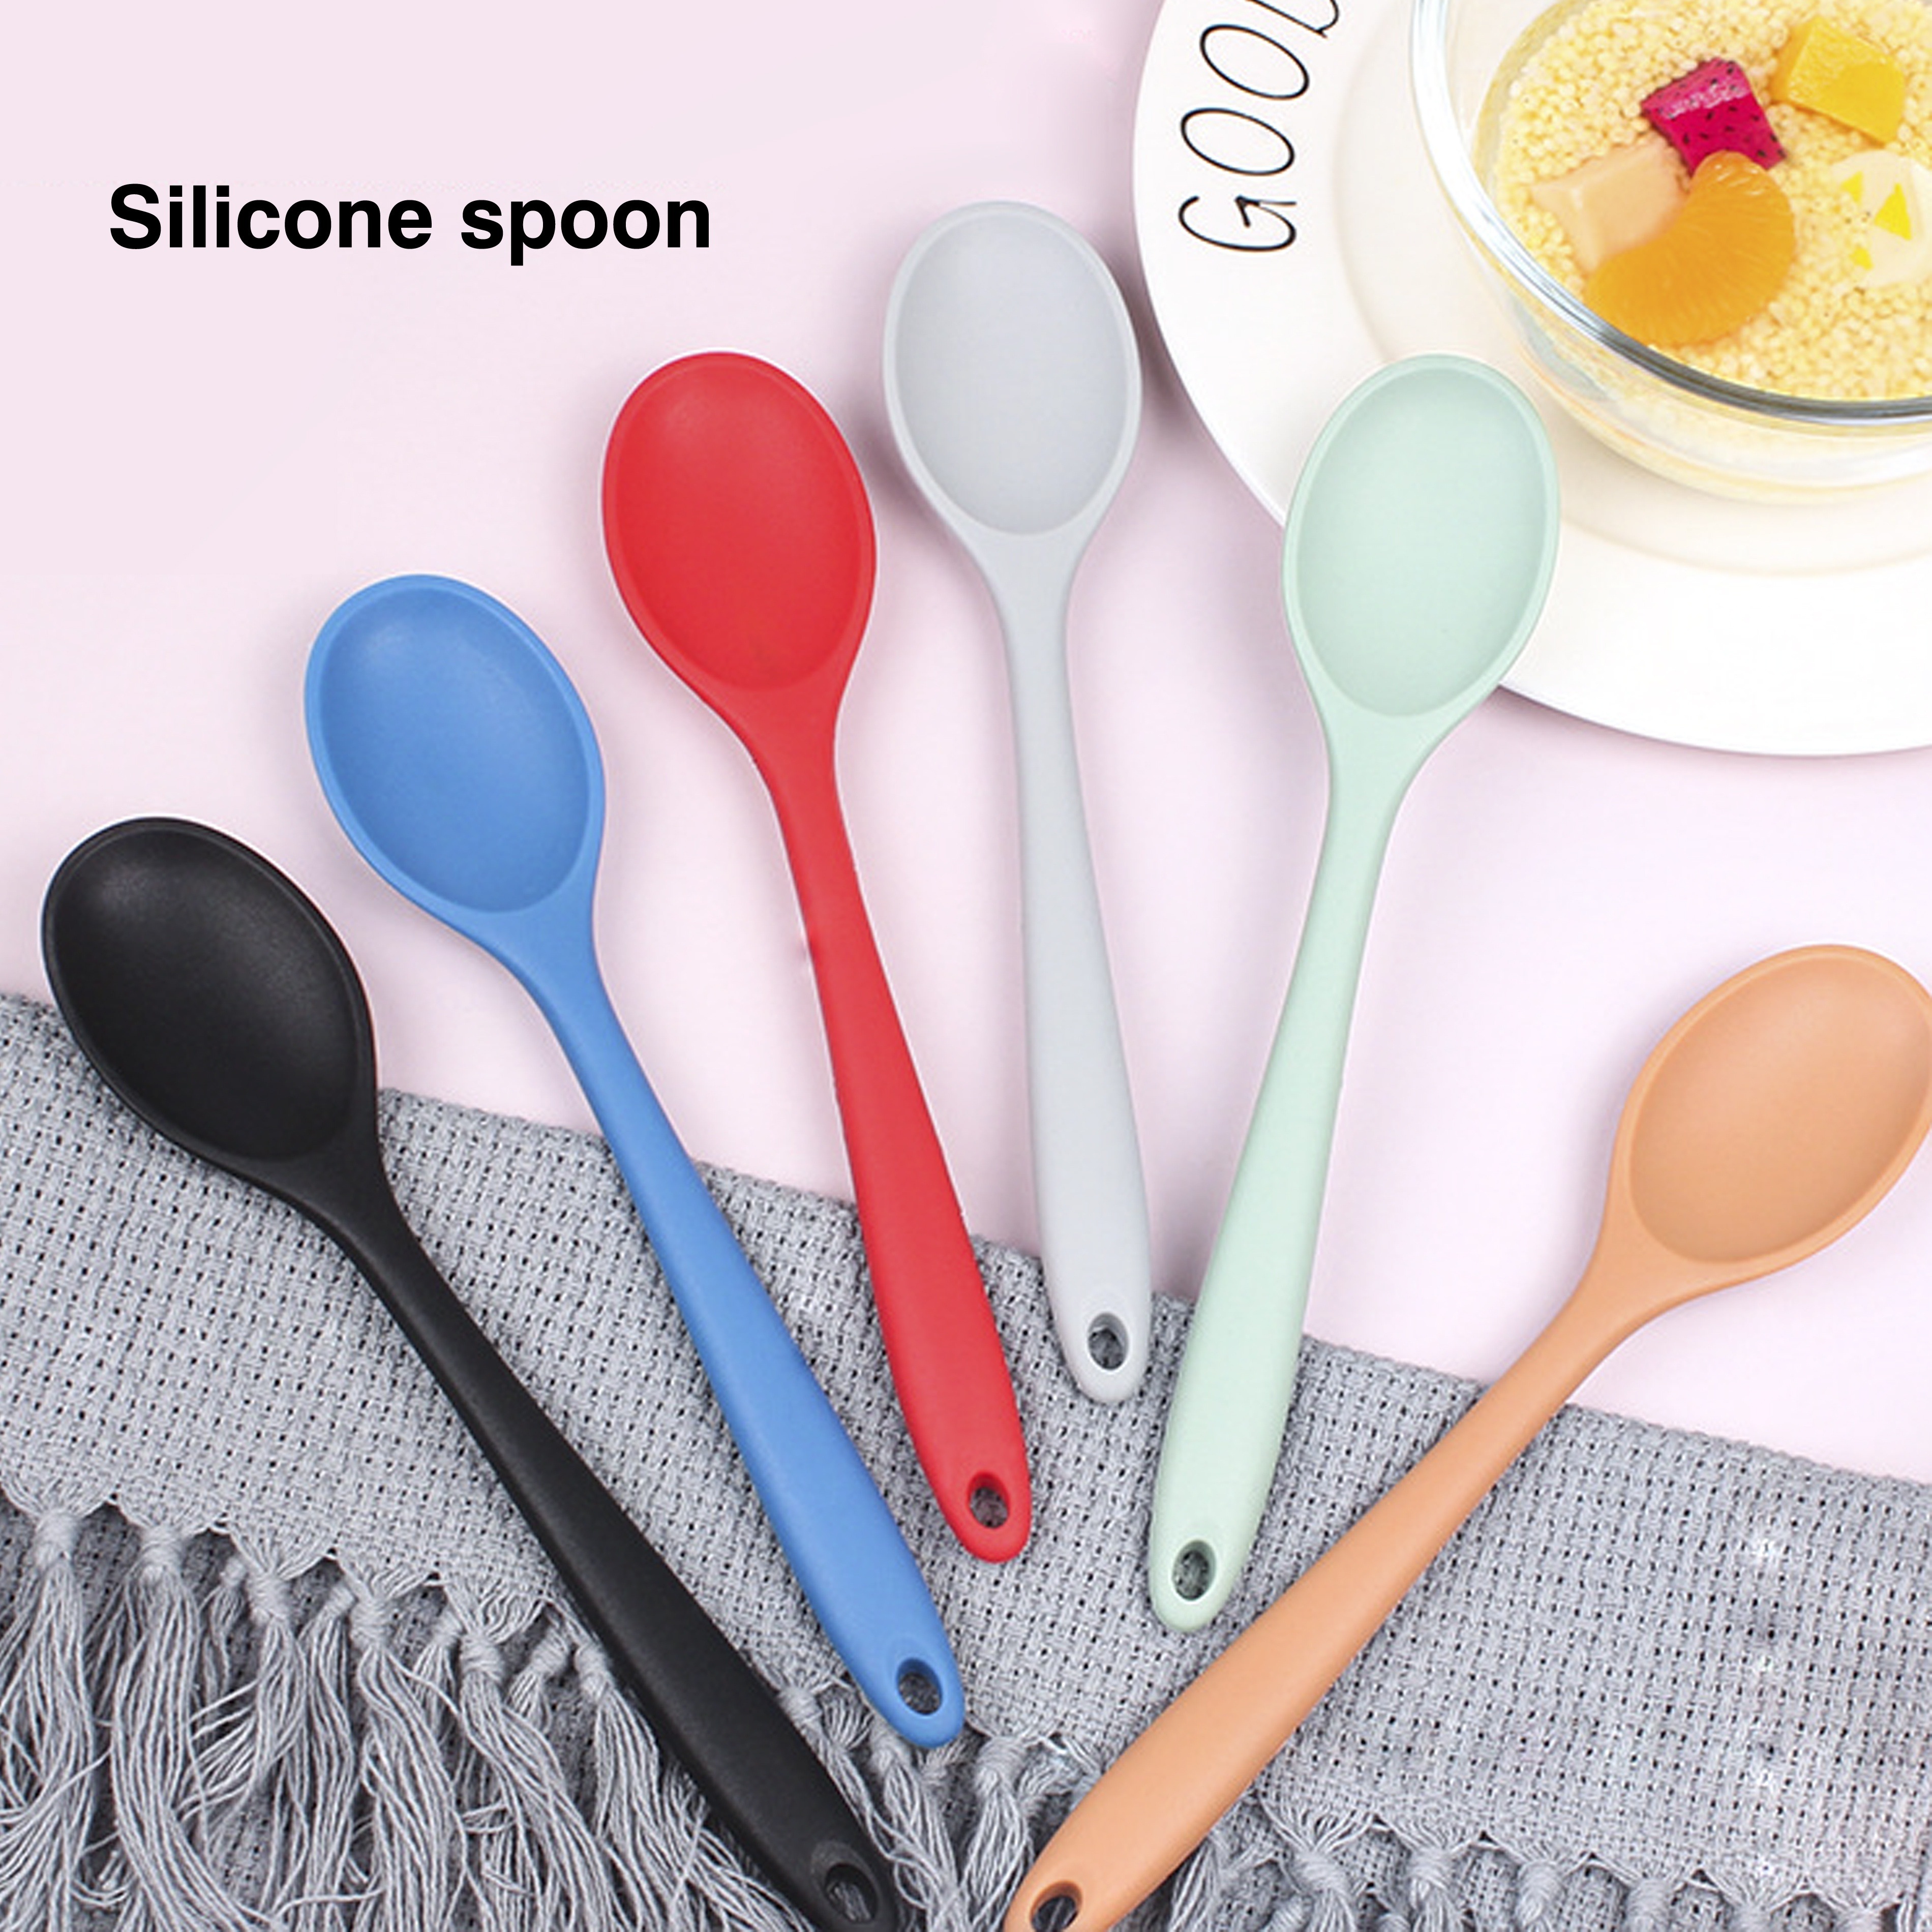 Rincones con Amor - El match perfecto 🤜💯🤛 Apoya cucharas + utensilios de  silicona en los colores que A M A M O S ❤🌈 ⠀ #COCINA #bazar #pastellover # apoyacucharas #silicona #aqua #